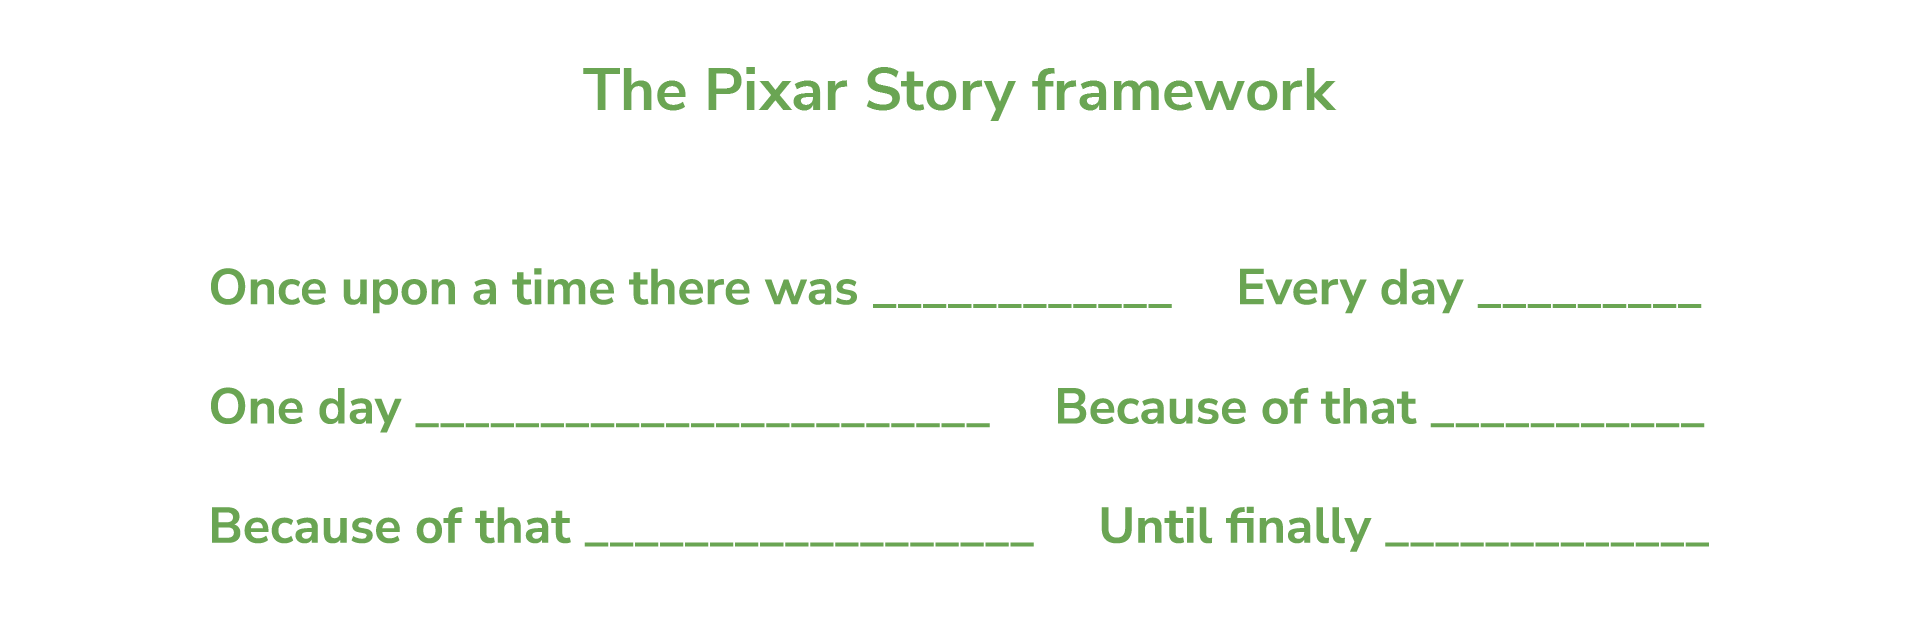 pixar-story-storytelling-framework-b2b